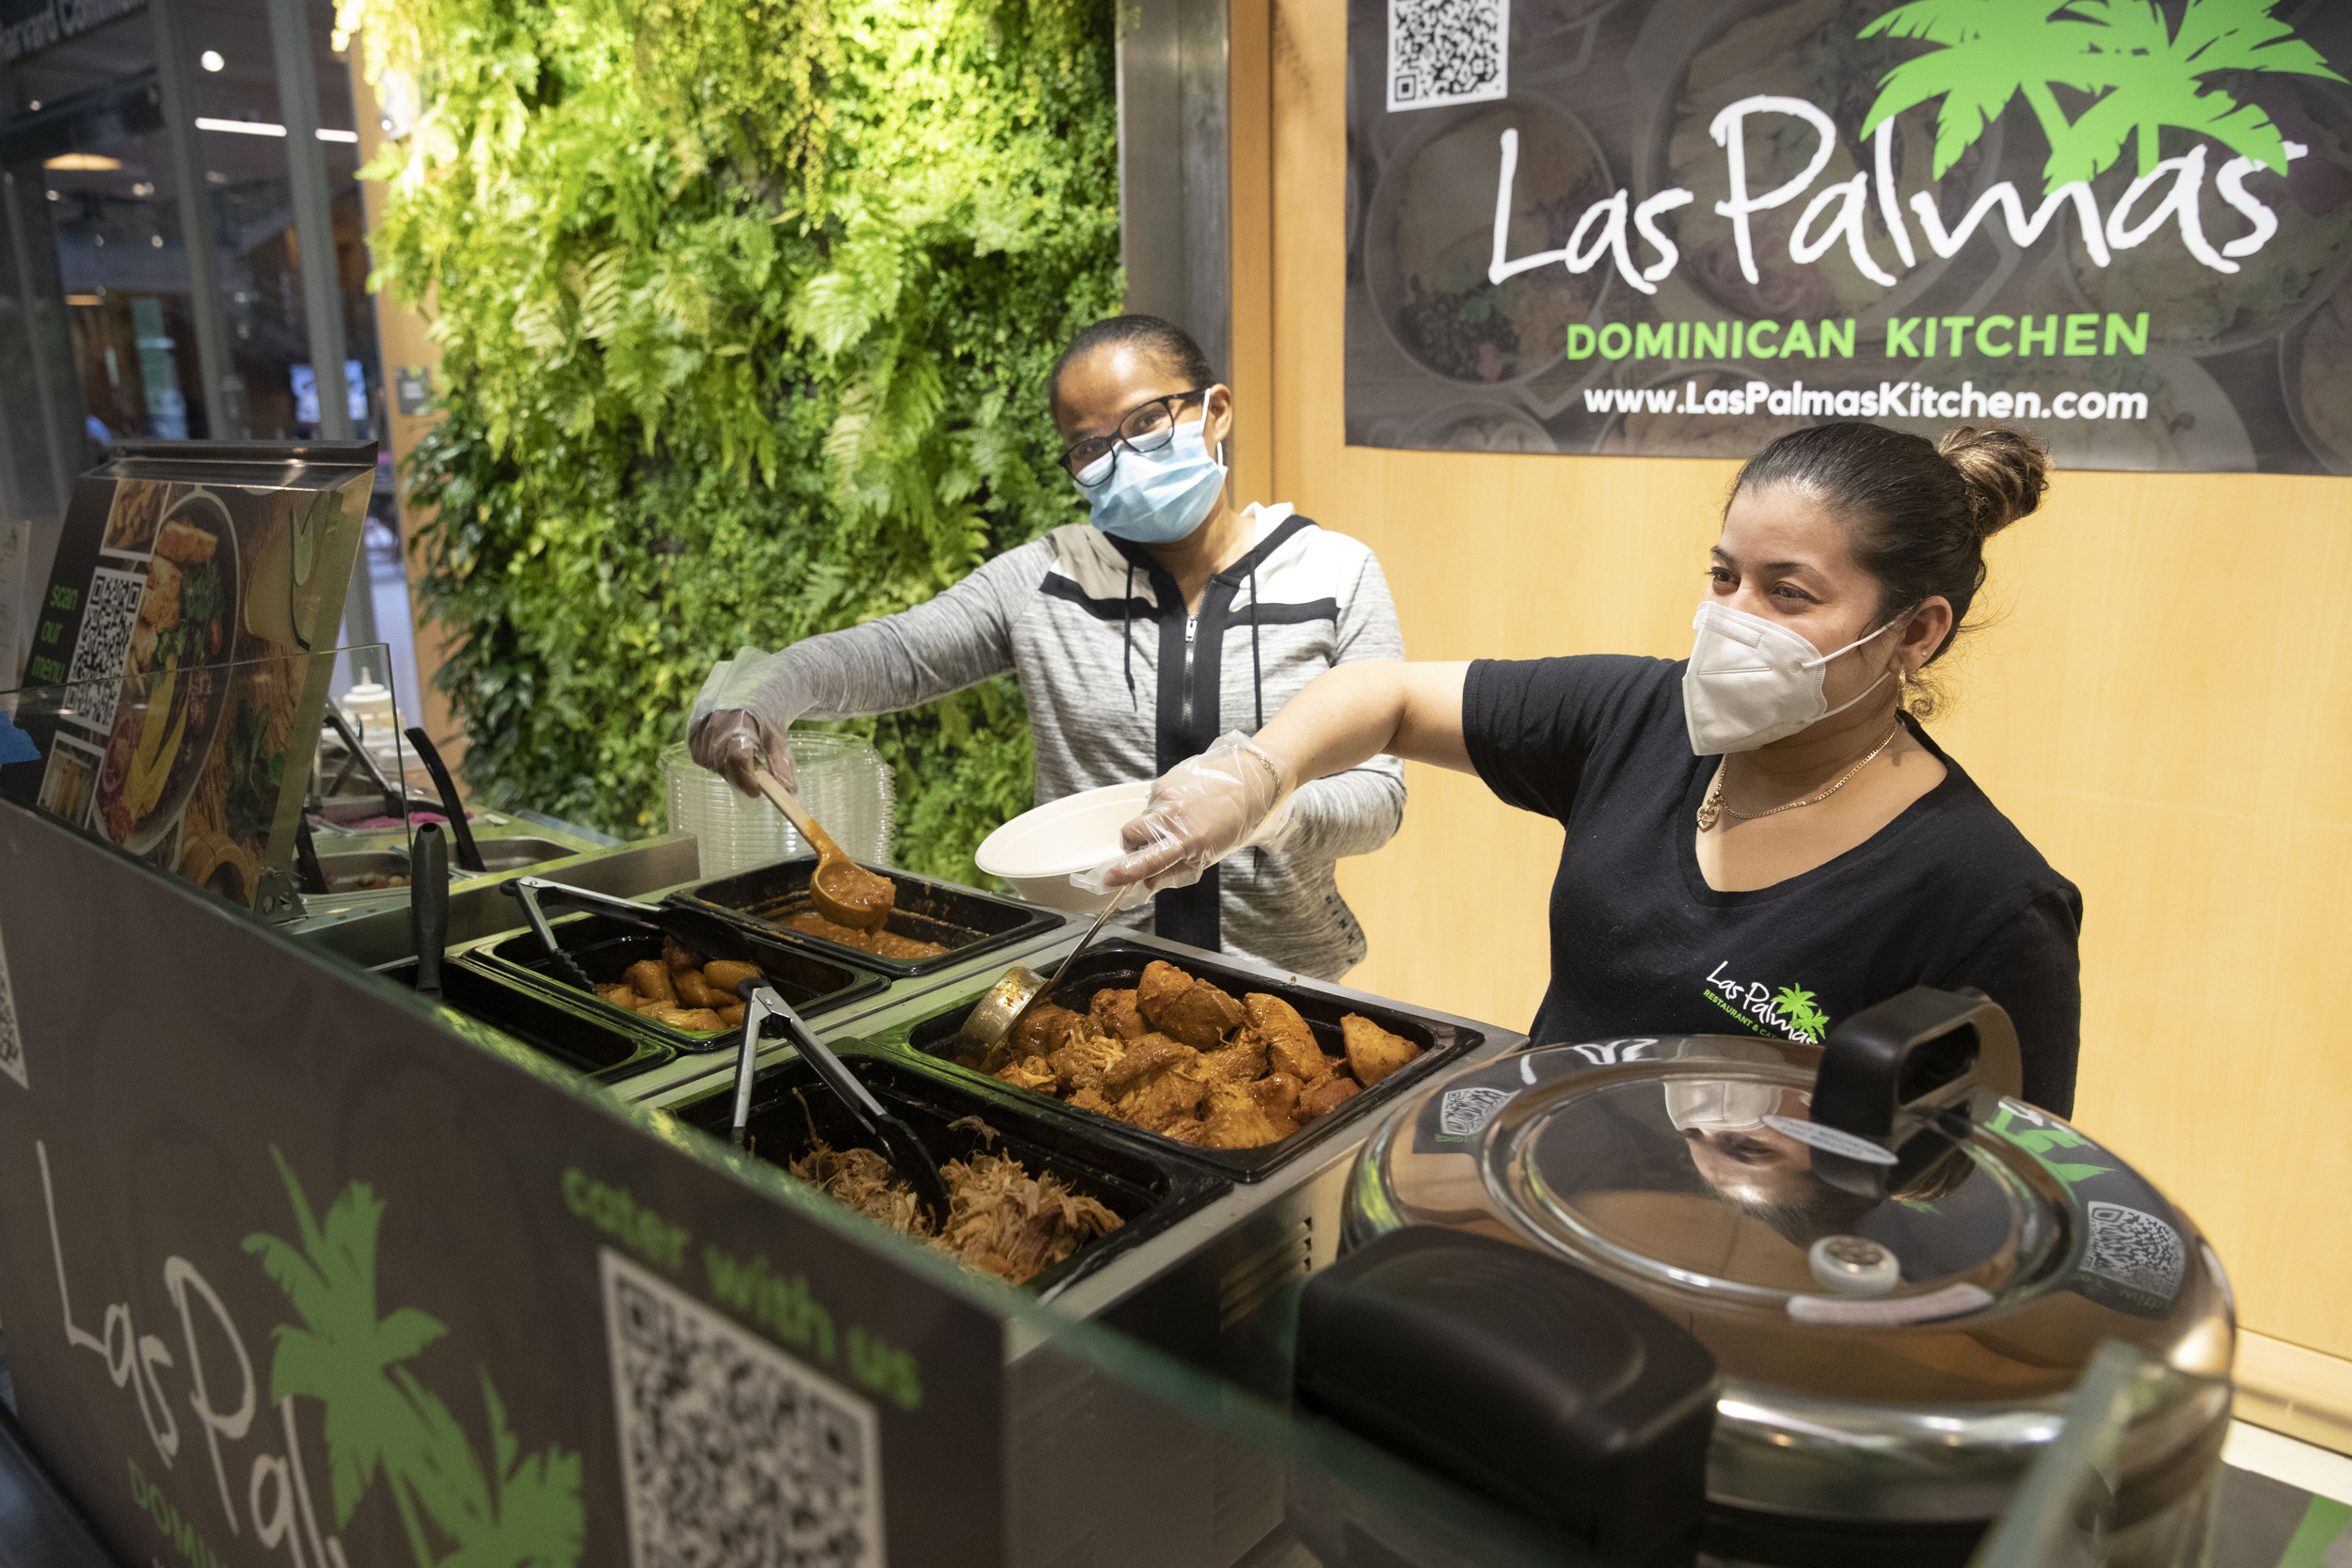 Maritza Hernandez (left) and Delores Martinez showcase Las Palmas’ featured fare